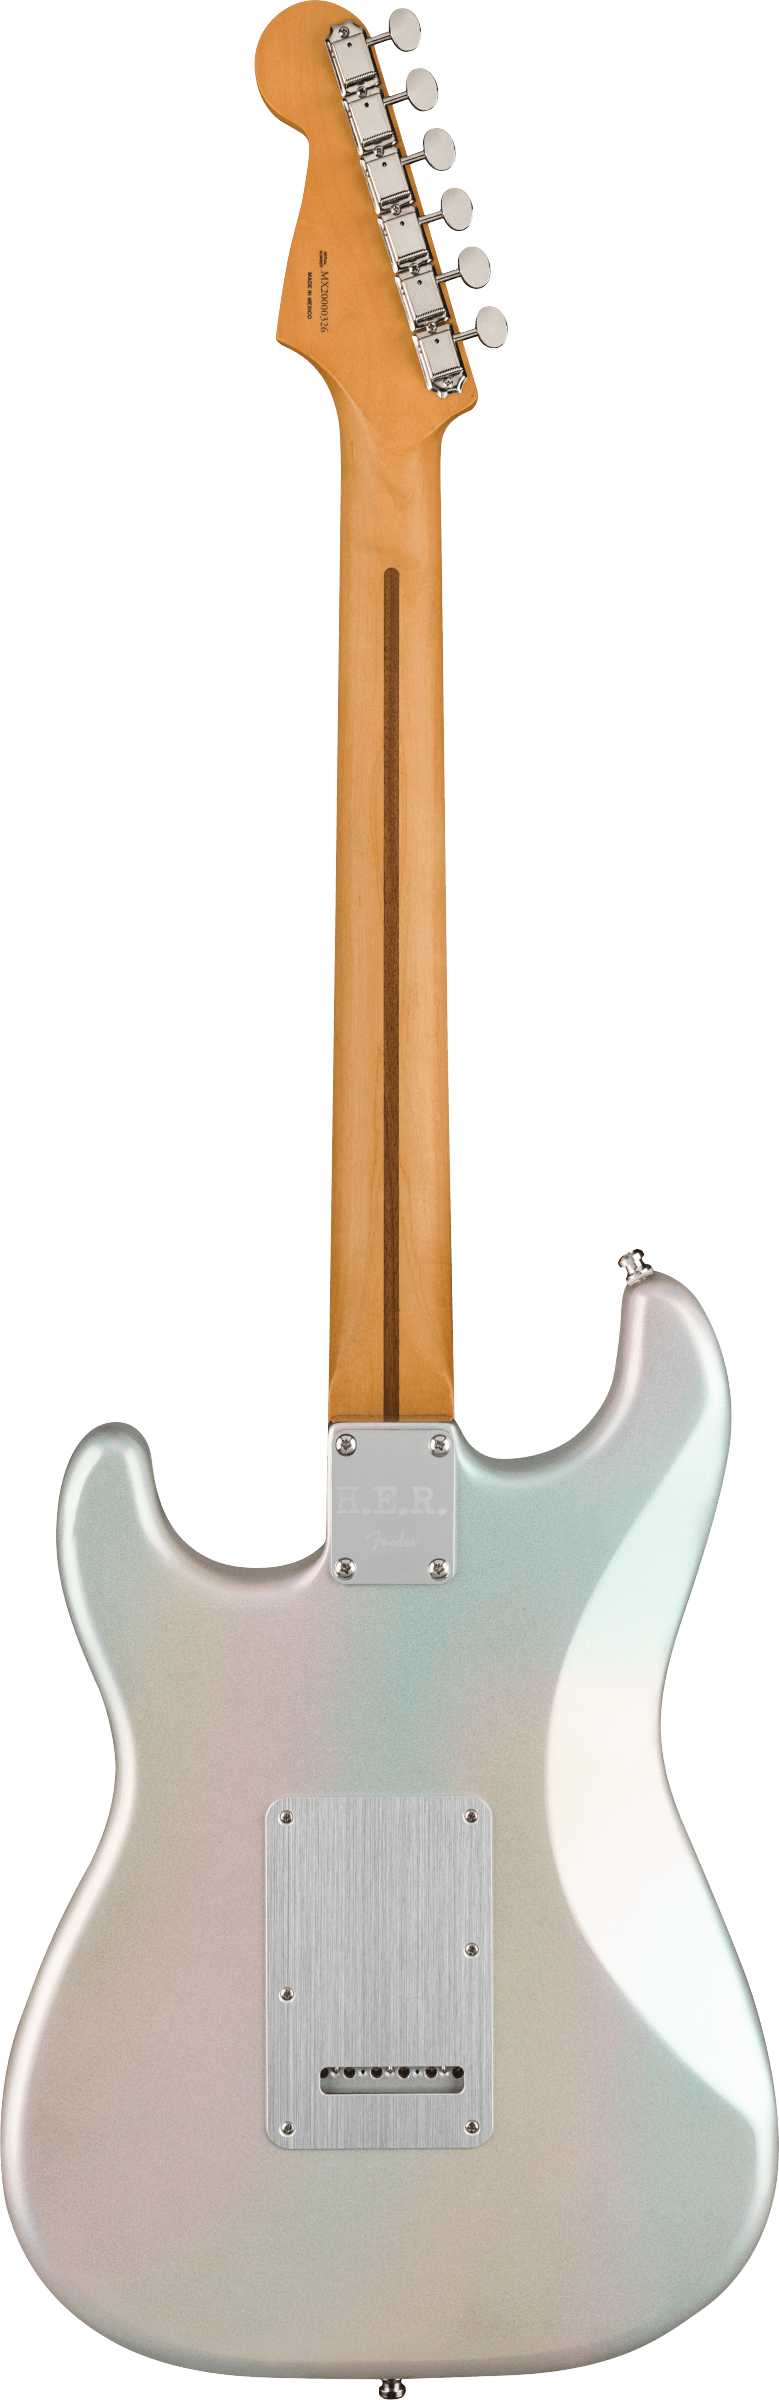 H.E.R. Stratocaster